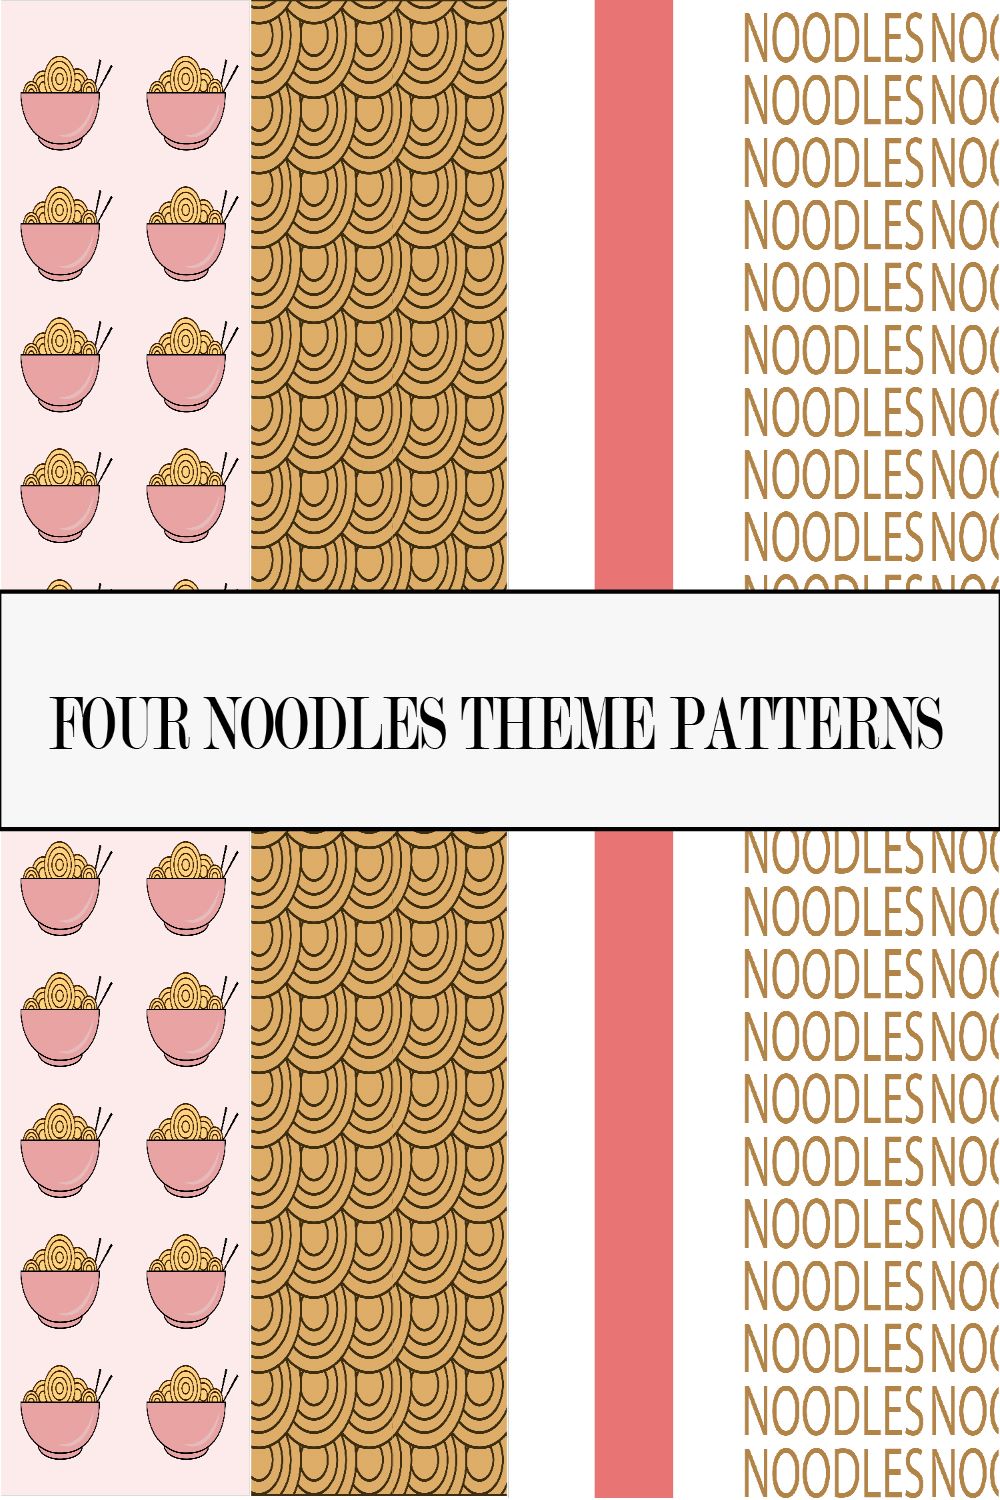 Noodles Theme Patterns Pinterest Collage image.